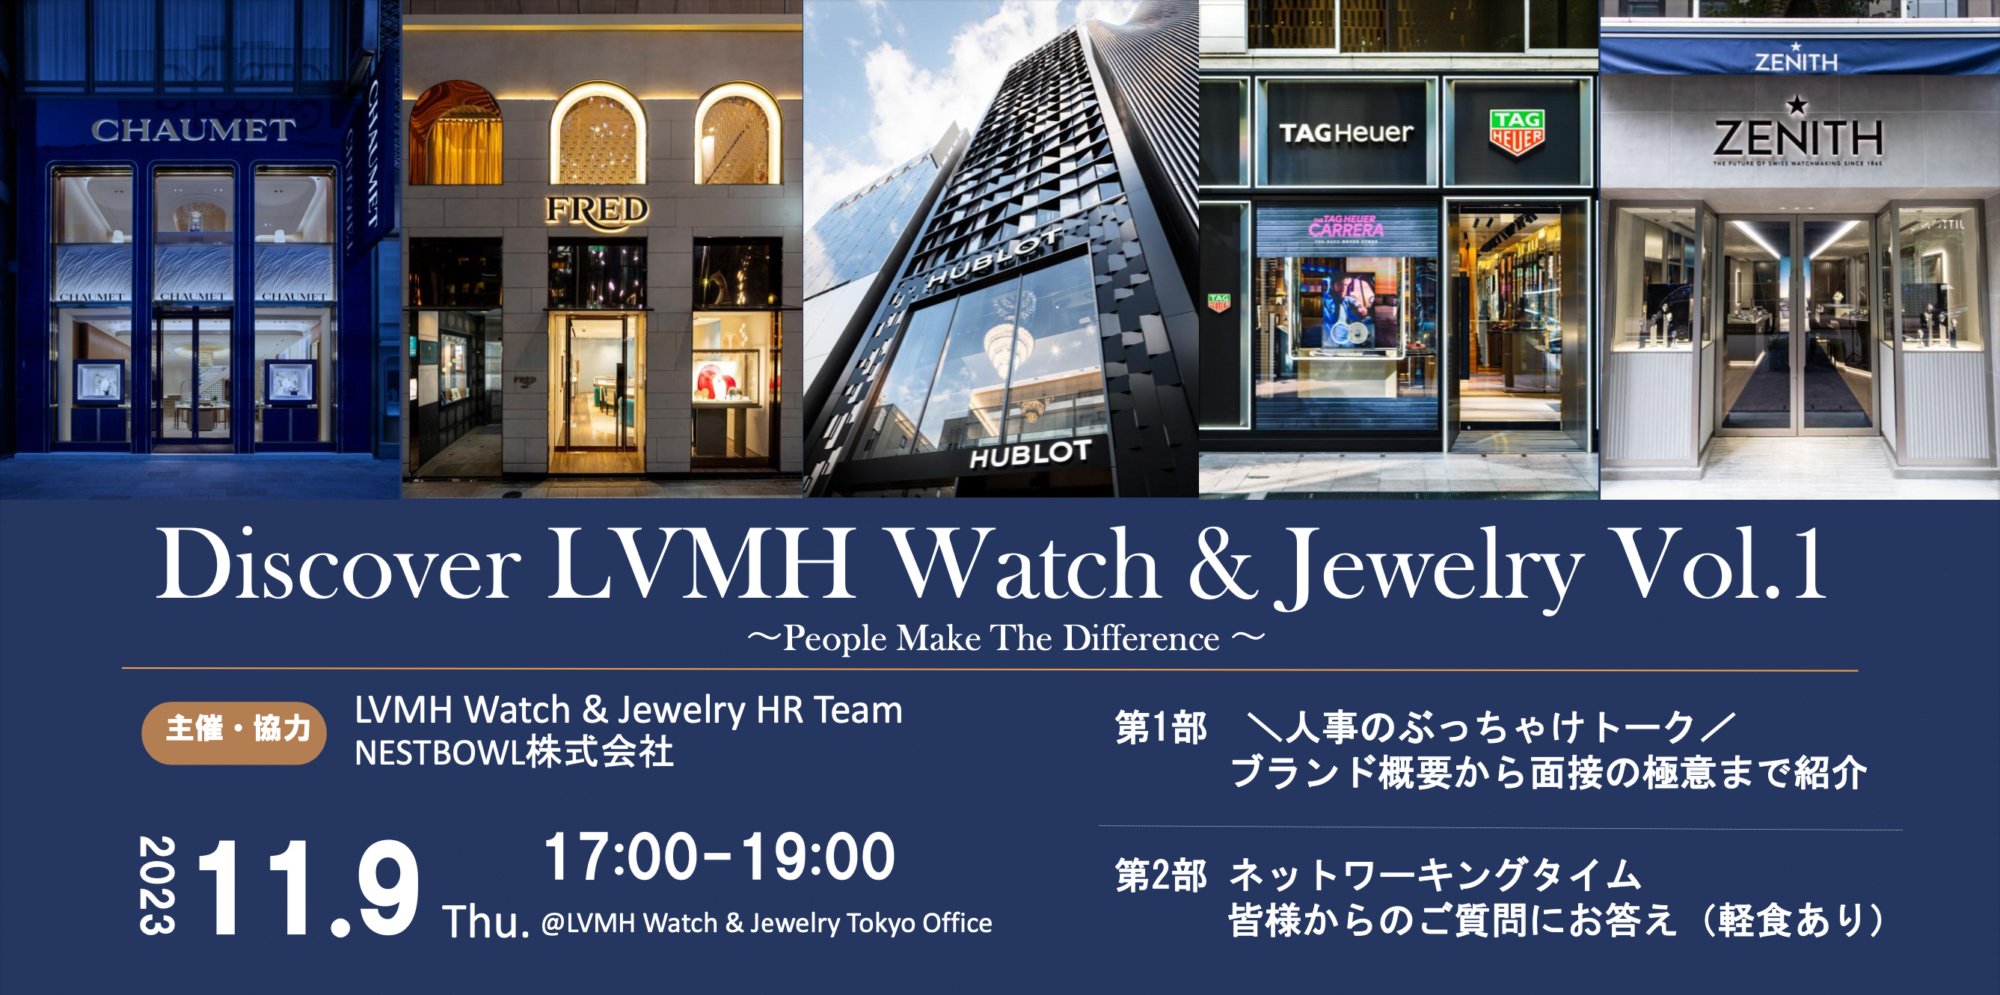 NESTBOWL × LVMH Watch & Jewelryコラボレーションイベントの概要